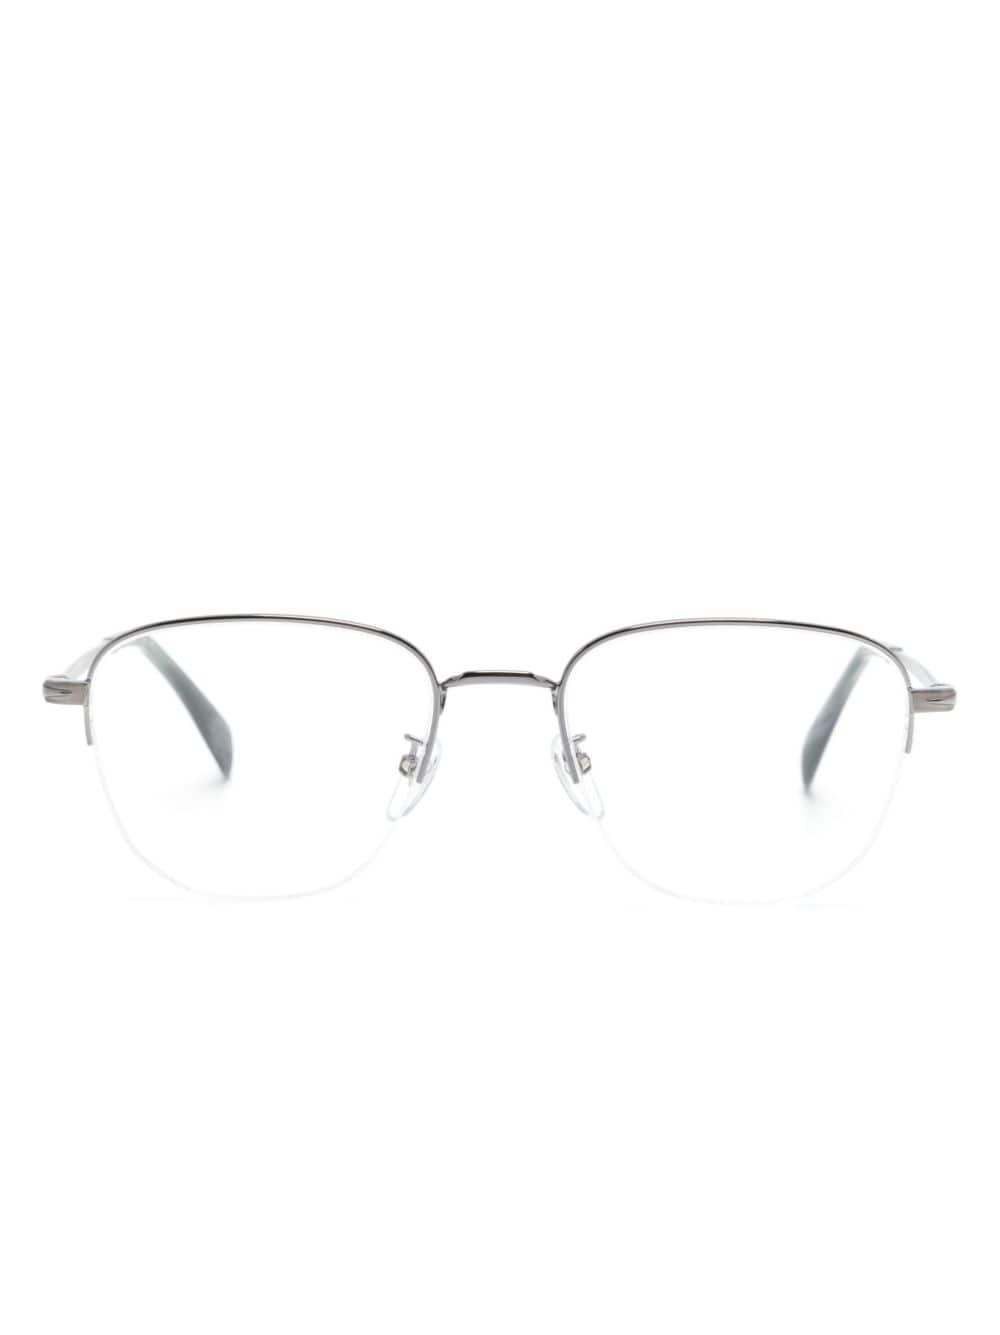 Eyewear by David Beckham frameless-design steel glasses - Silver von Eyewear by David Beckham